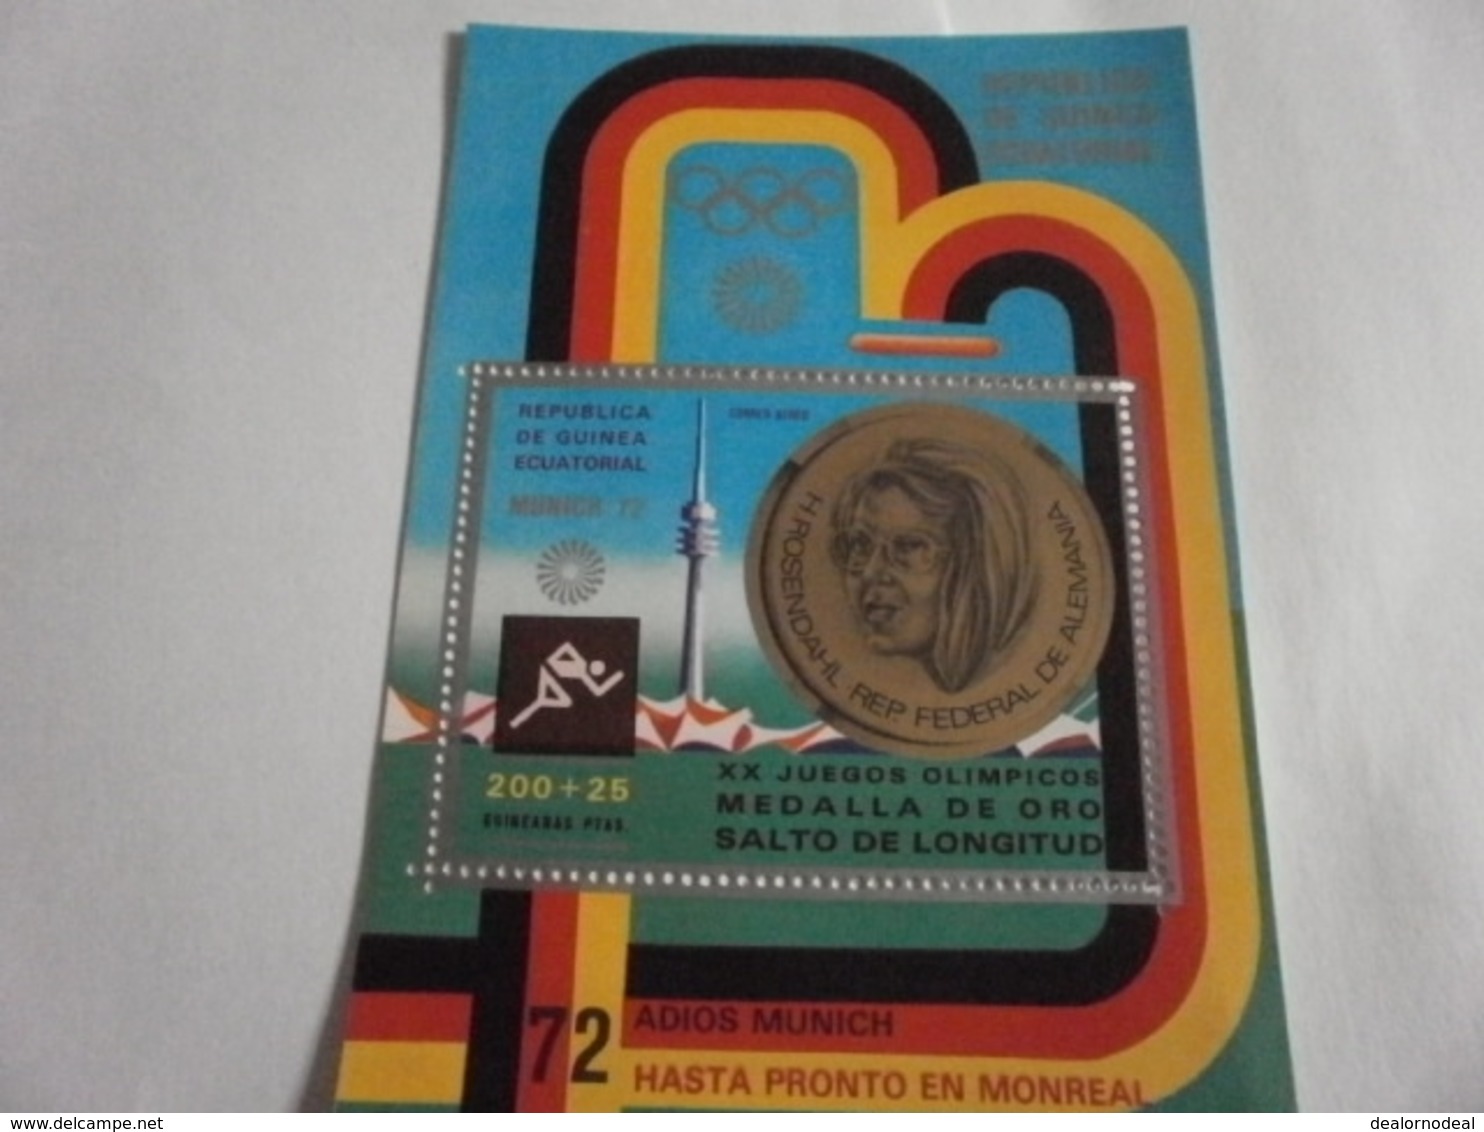 Miniature Sheet Perf 1972 Munich Olympics Germany - Equatorial Guinea